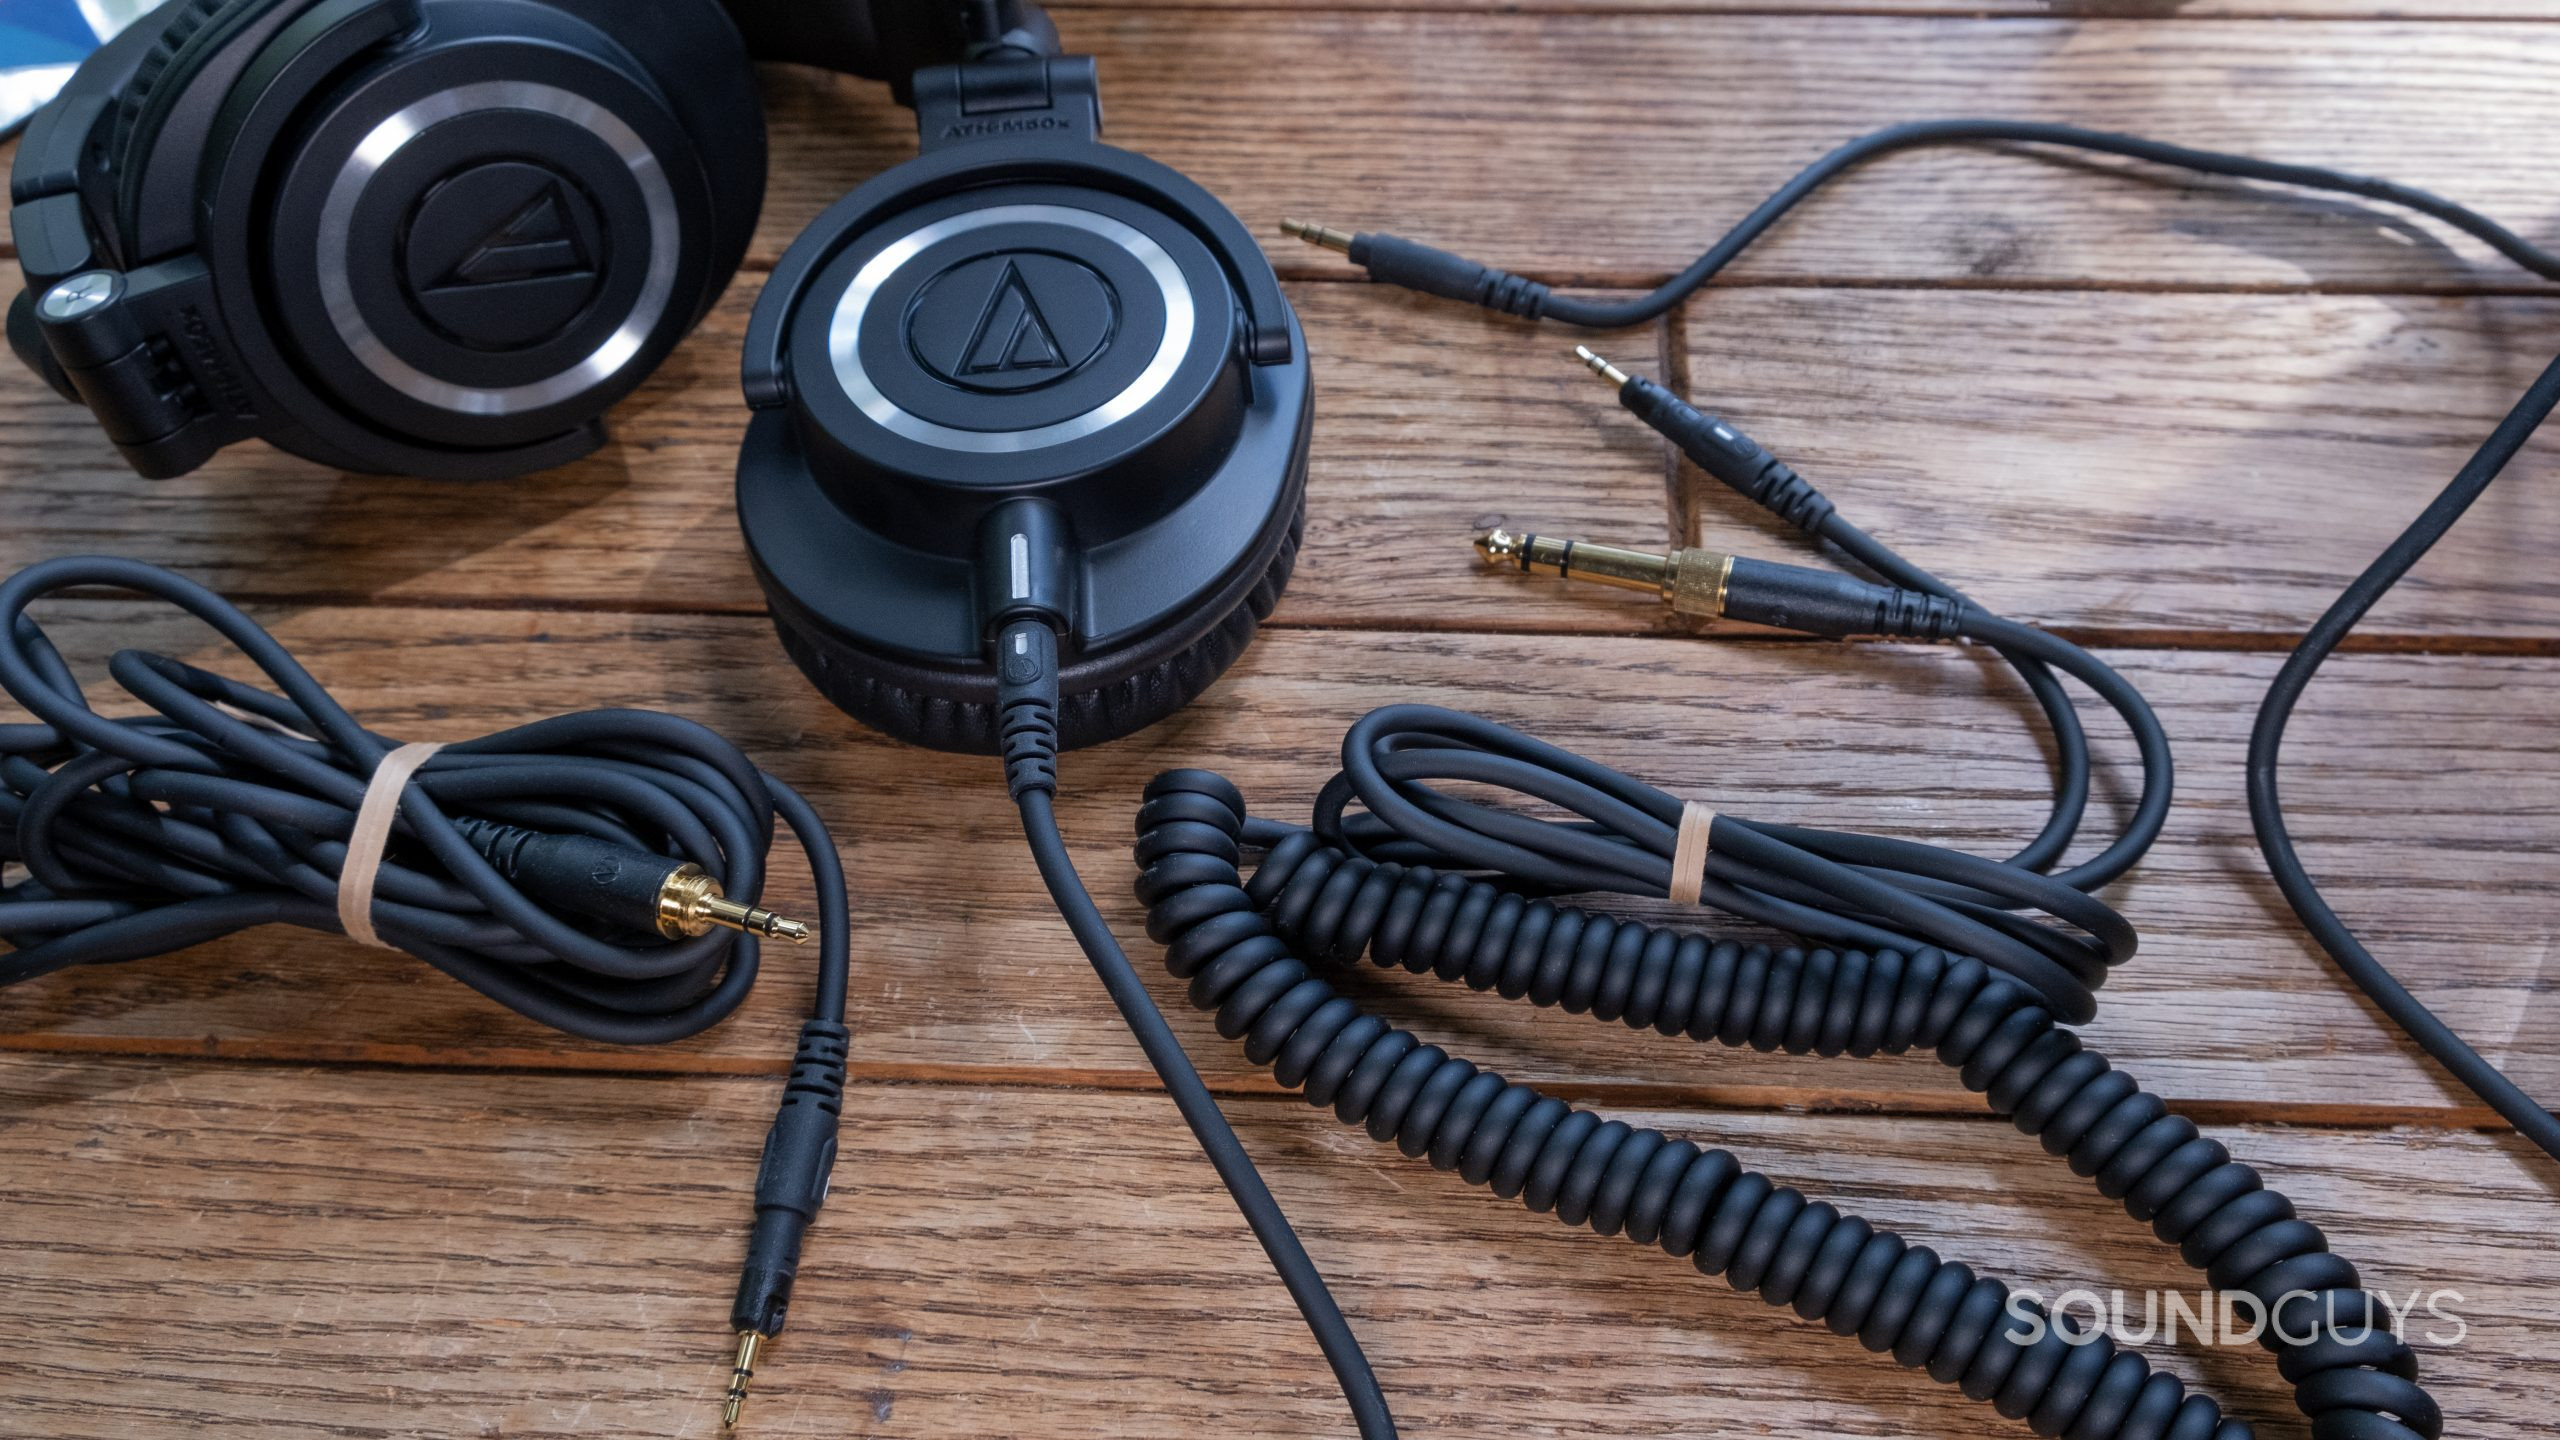 Audio-Technica ATH-M50x Review: Great All-Around Studio Headphones